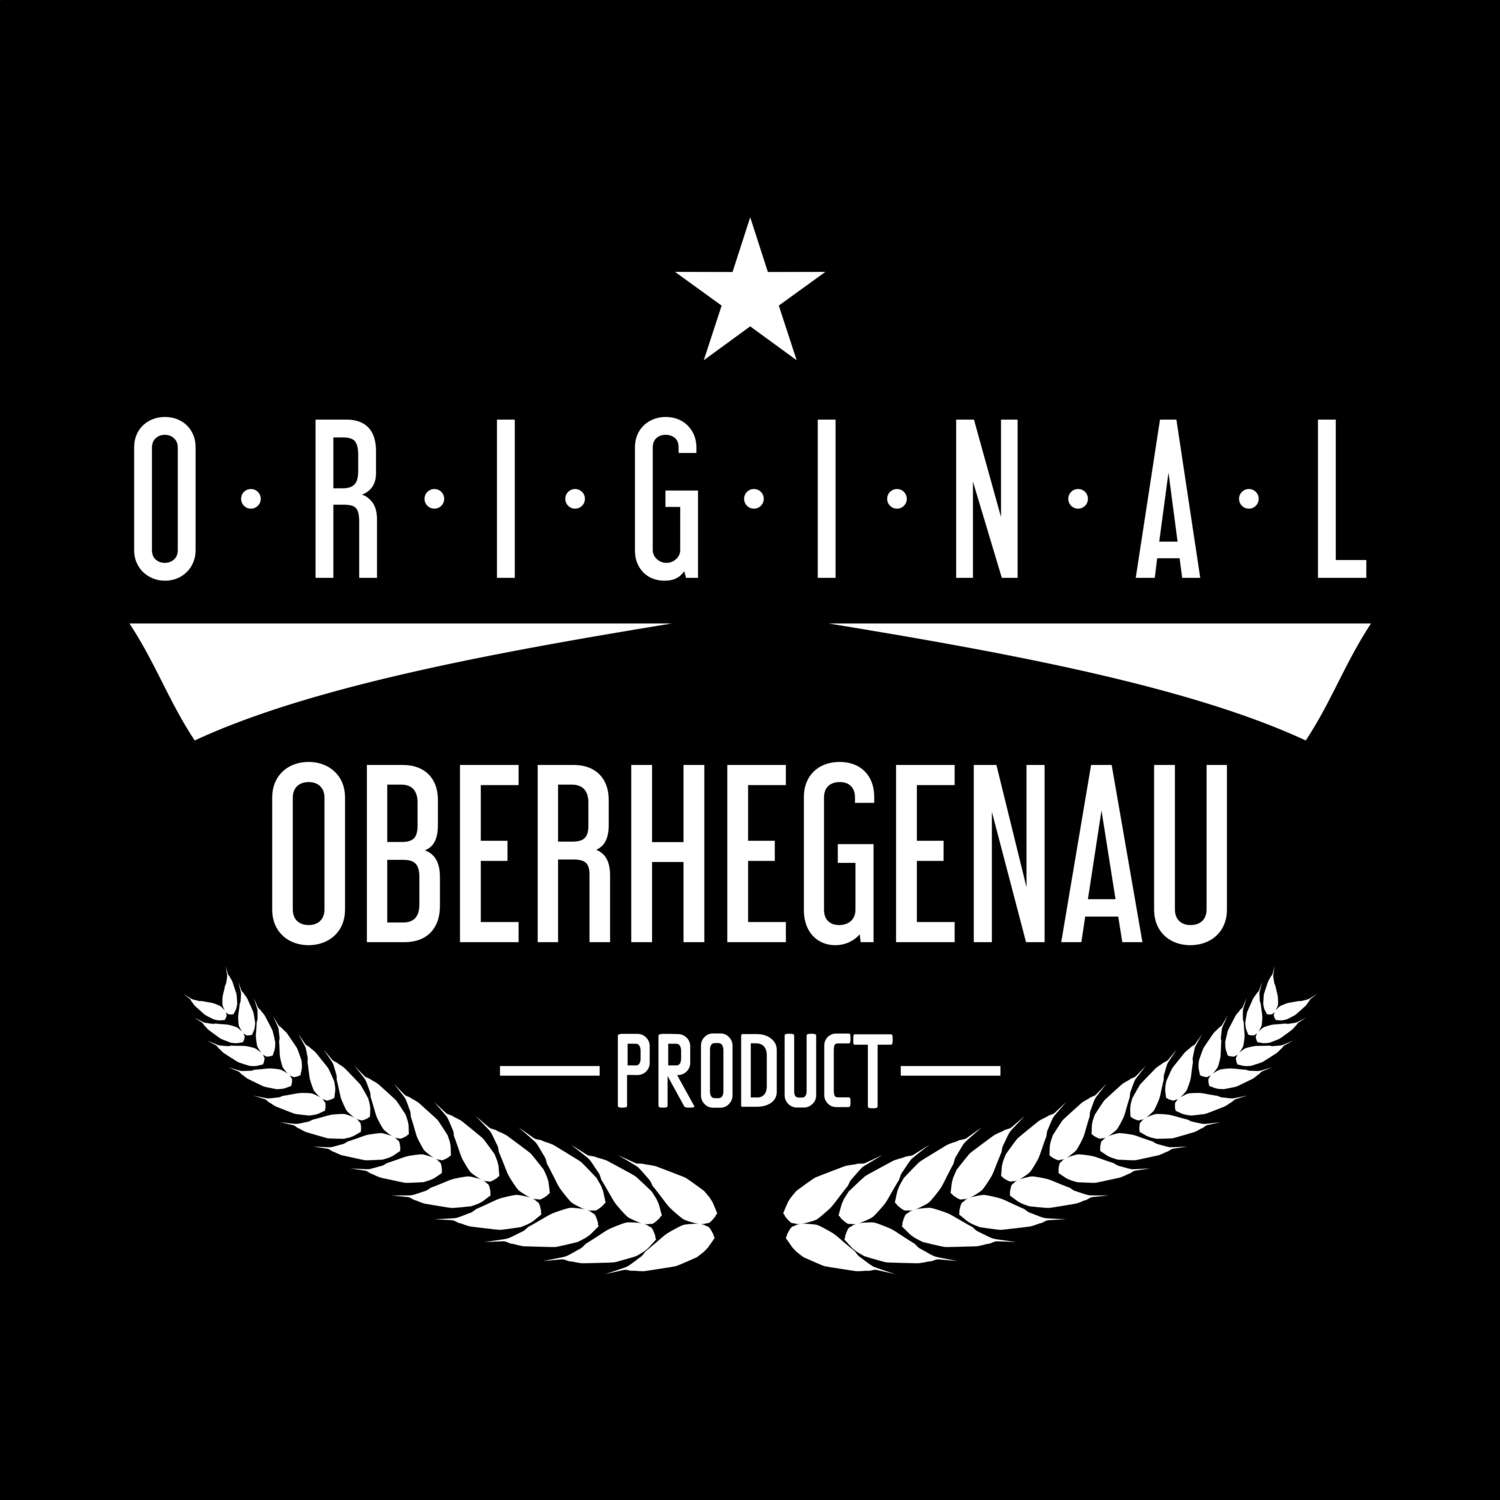 Oberhegenau T-Shirt »Original Product«